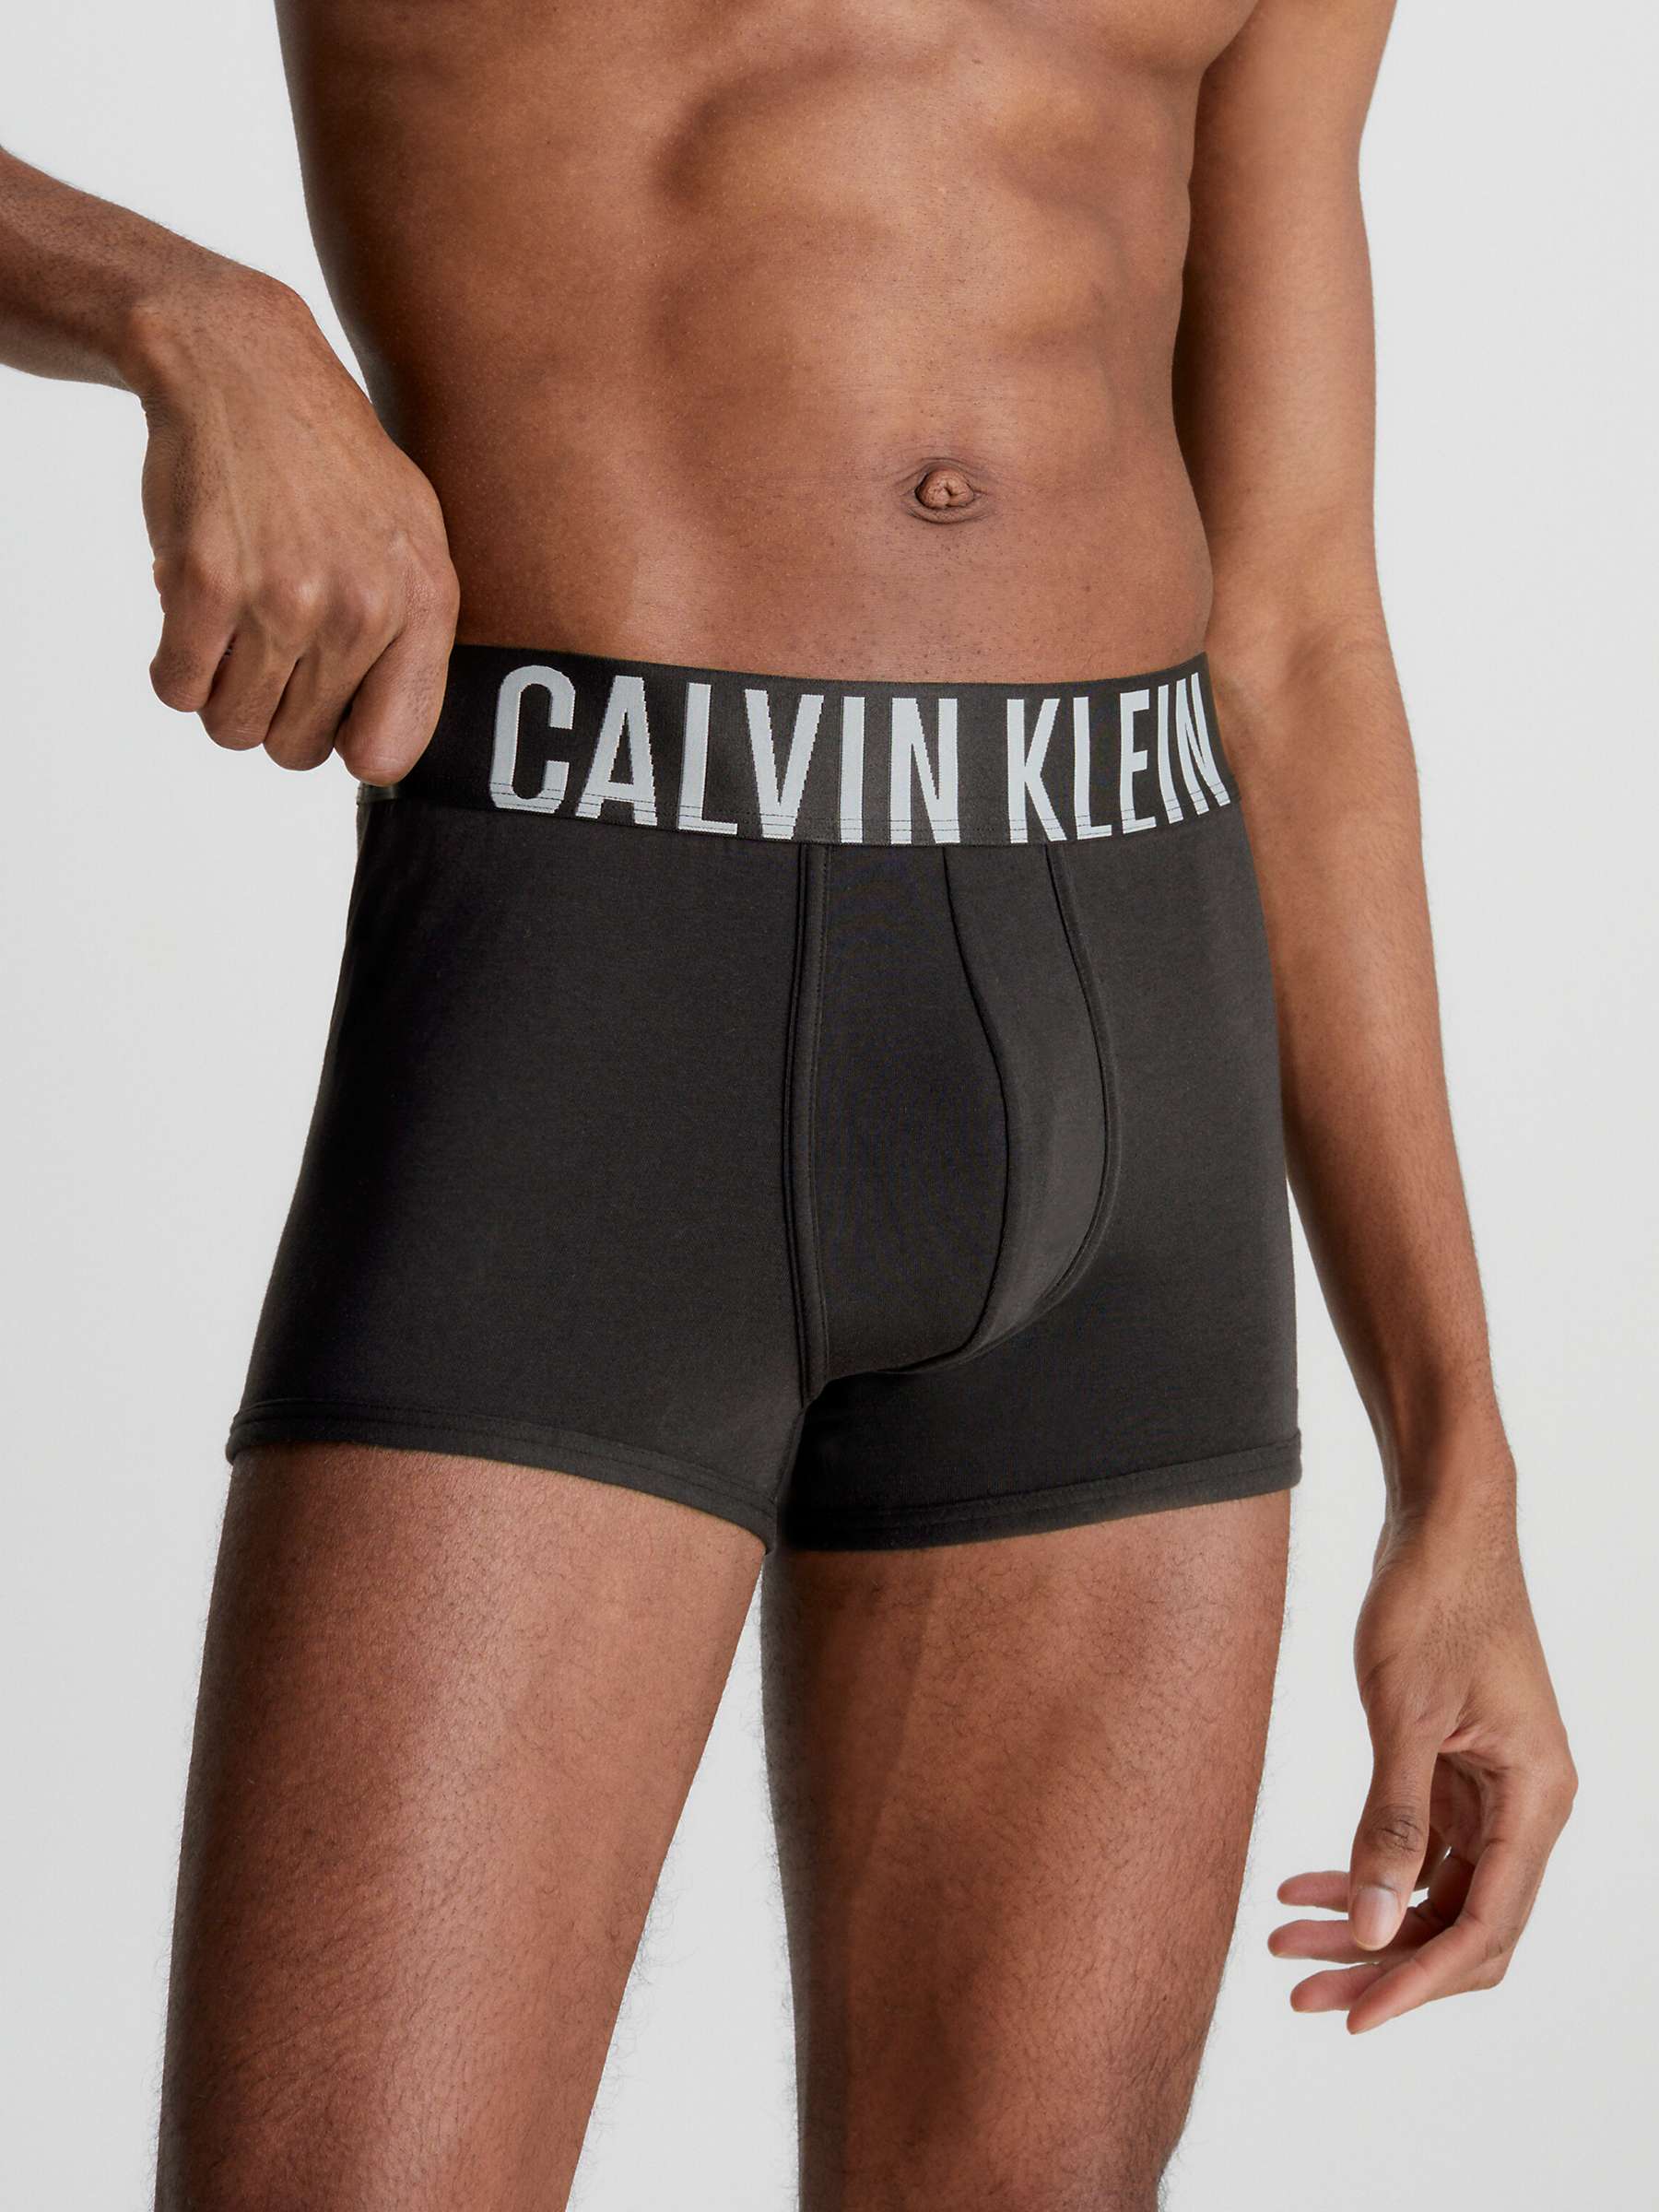 Mens Clothing Underwear Boxers Calvin Klein Cotton Two Pack Intense Power Trunks in Black for Men 